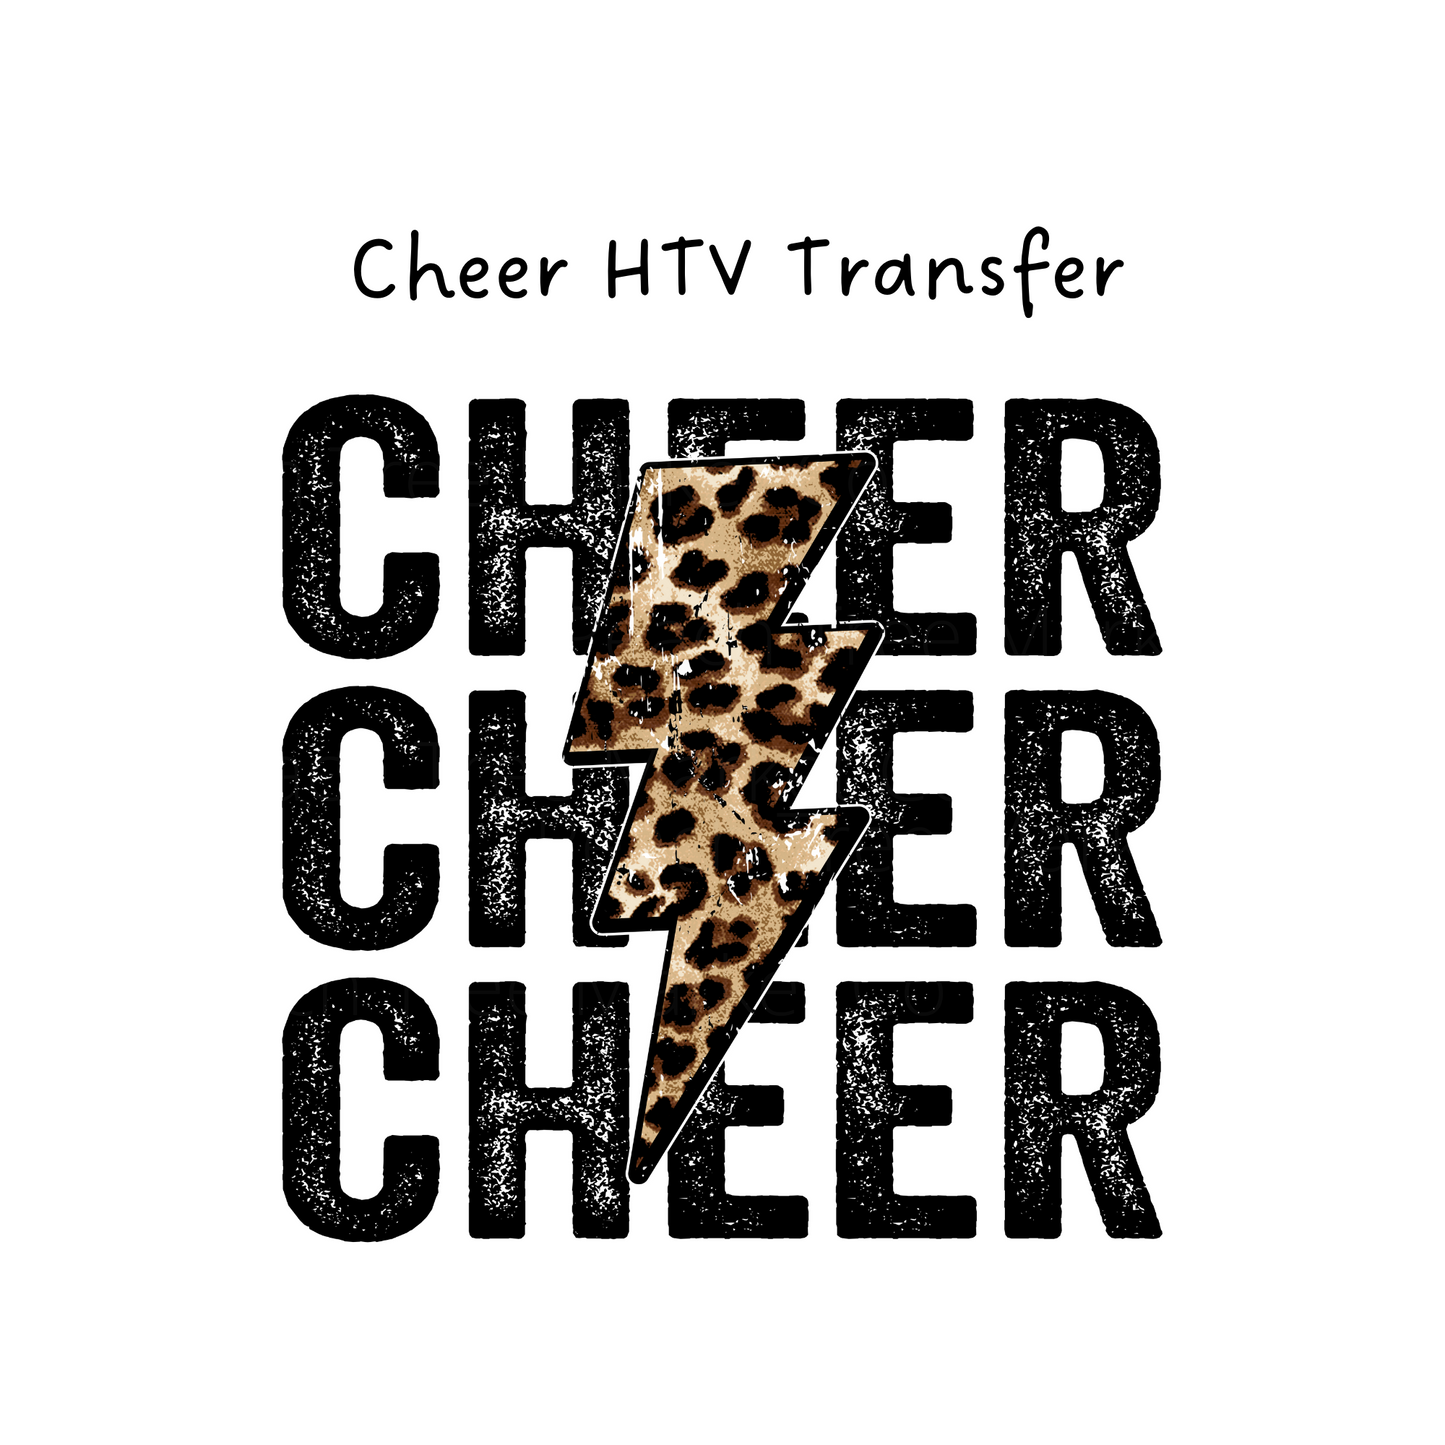 Cheer HTV Transfer